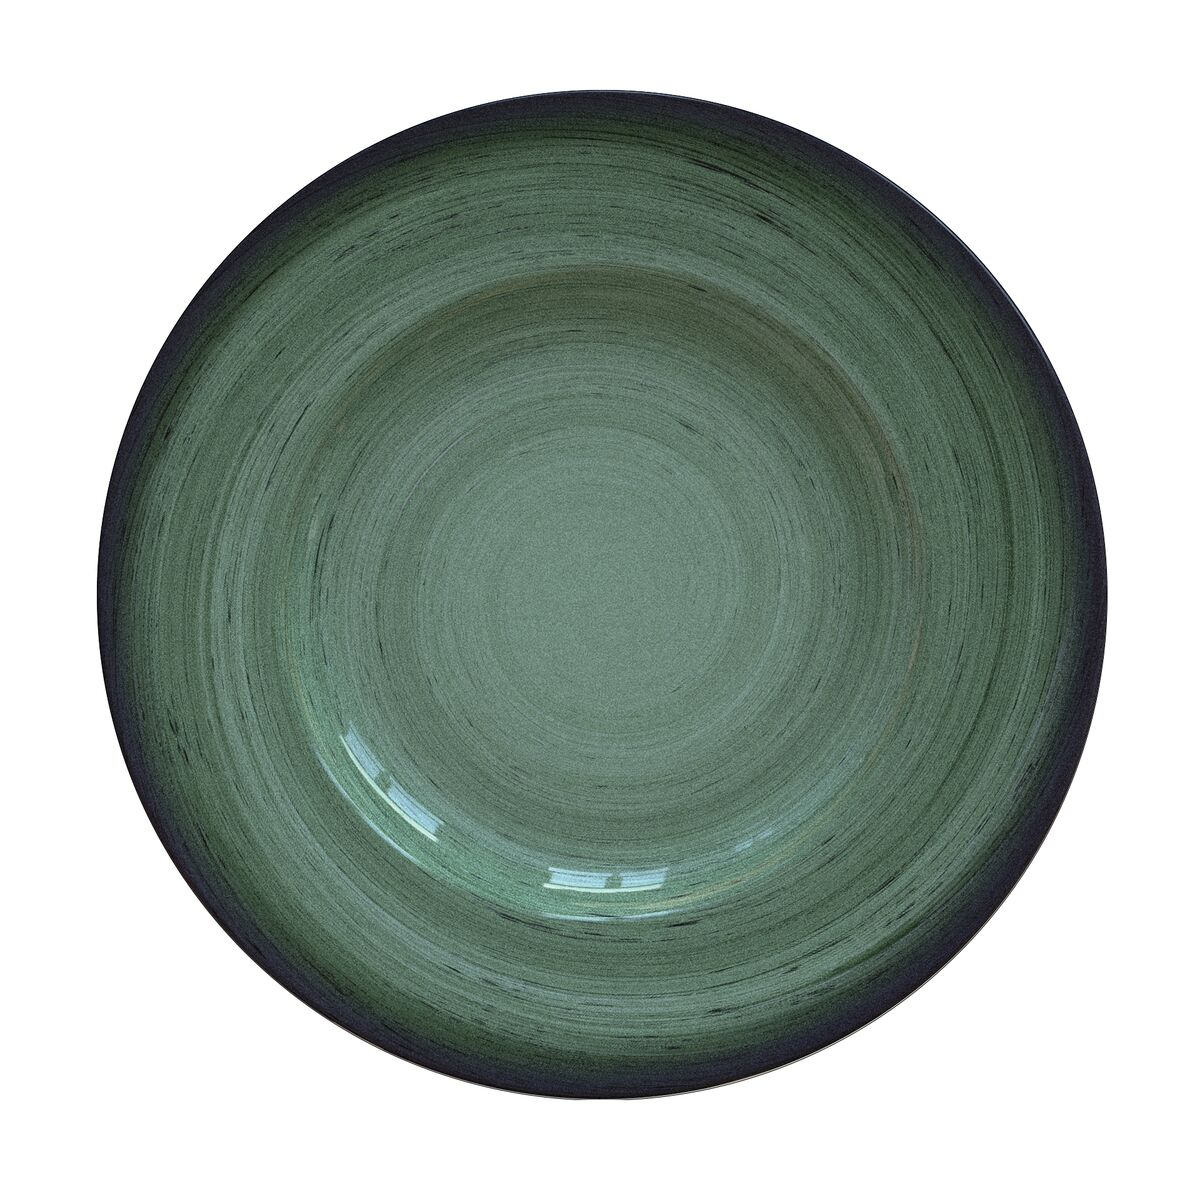 Tramontina Rústico Green 27 cm Decorated Porcelain Dinner Plate